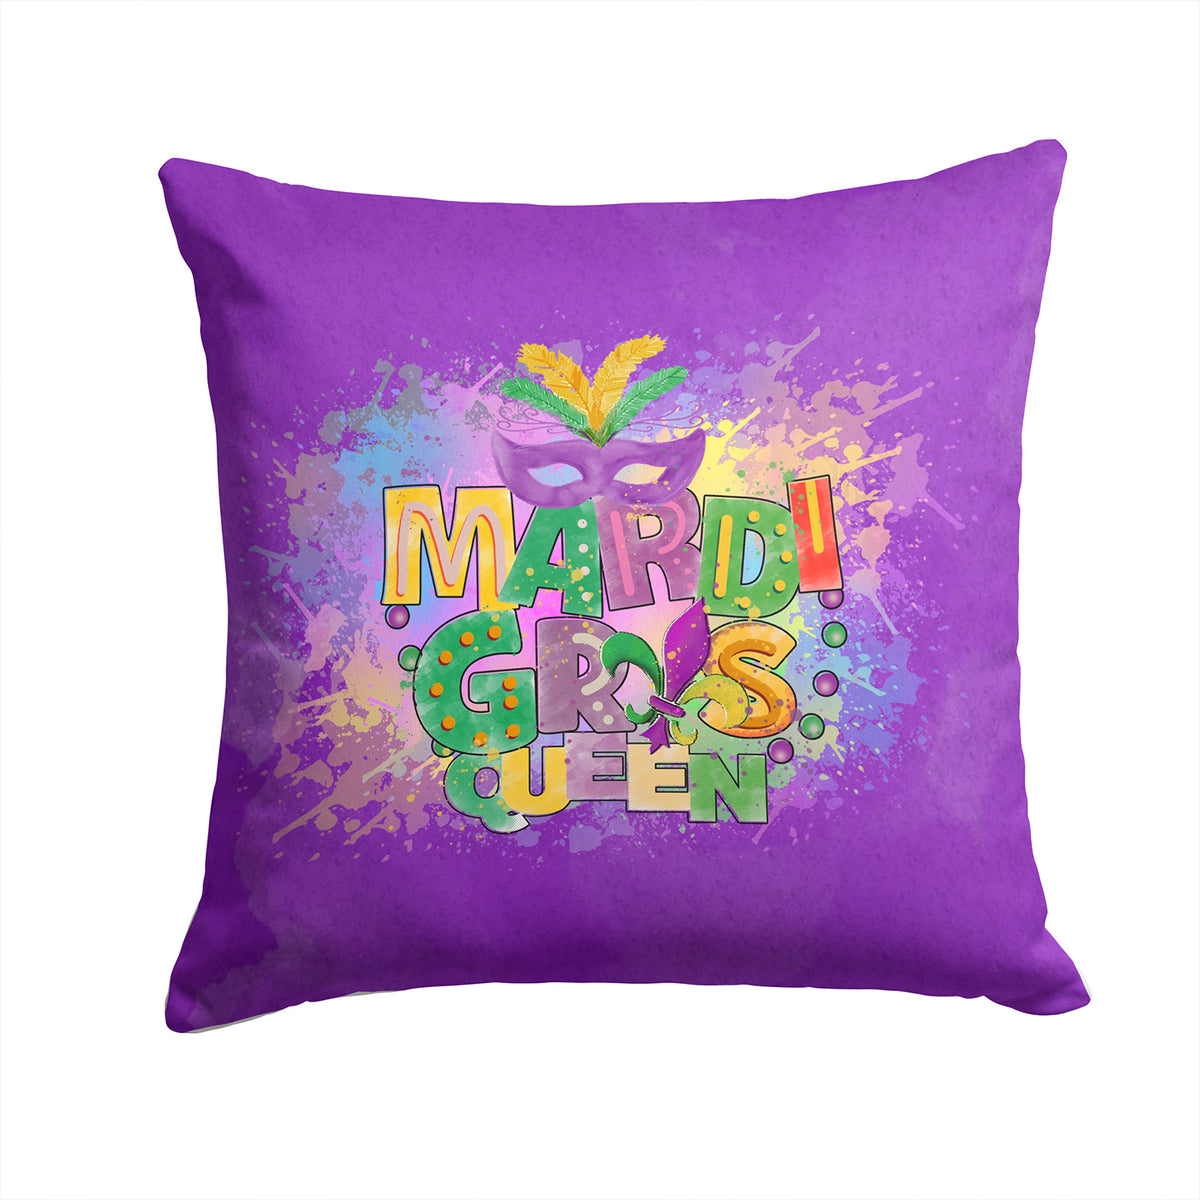 Buy this Mardi Gras Queen Fabric Decorative Pillow